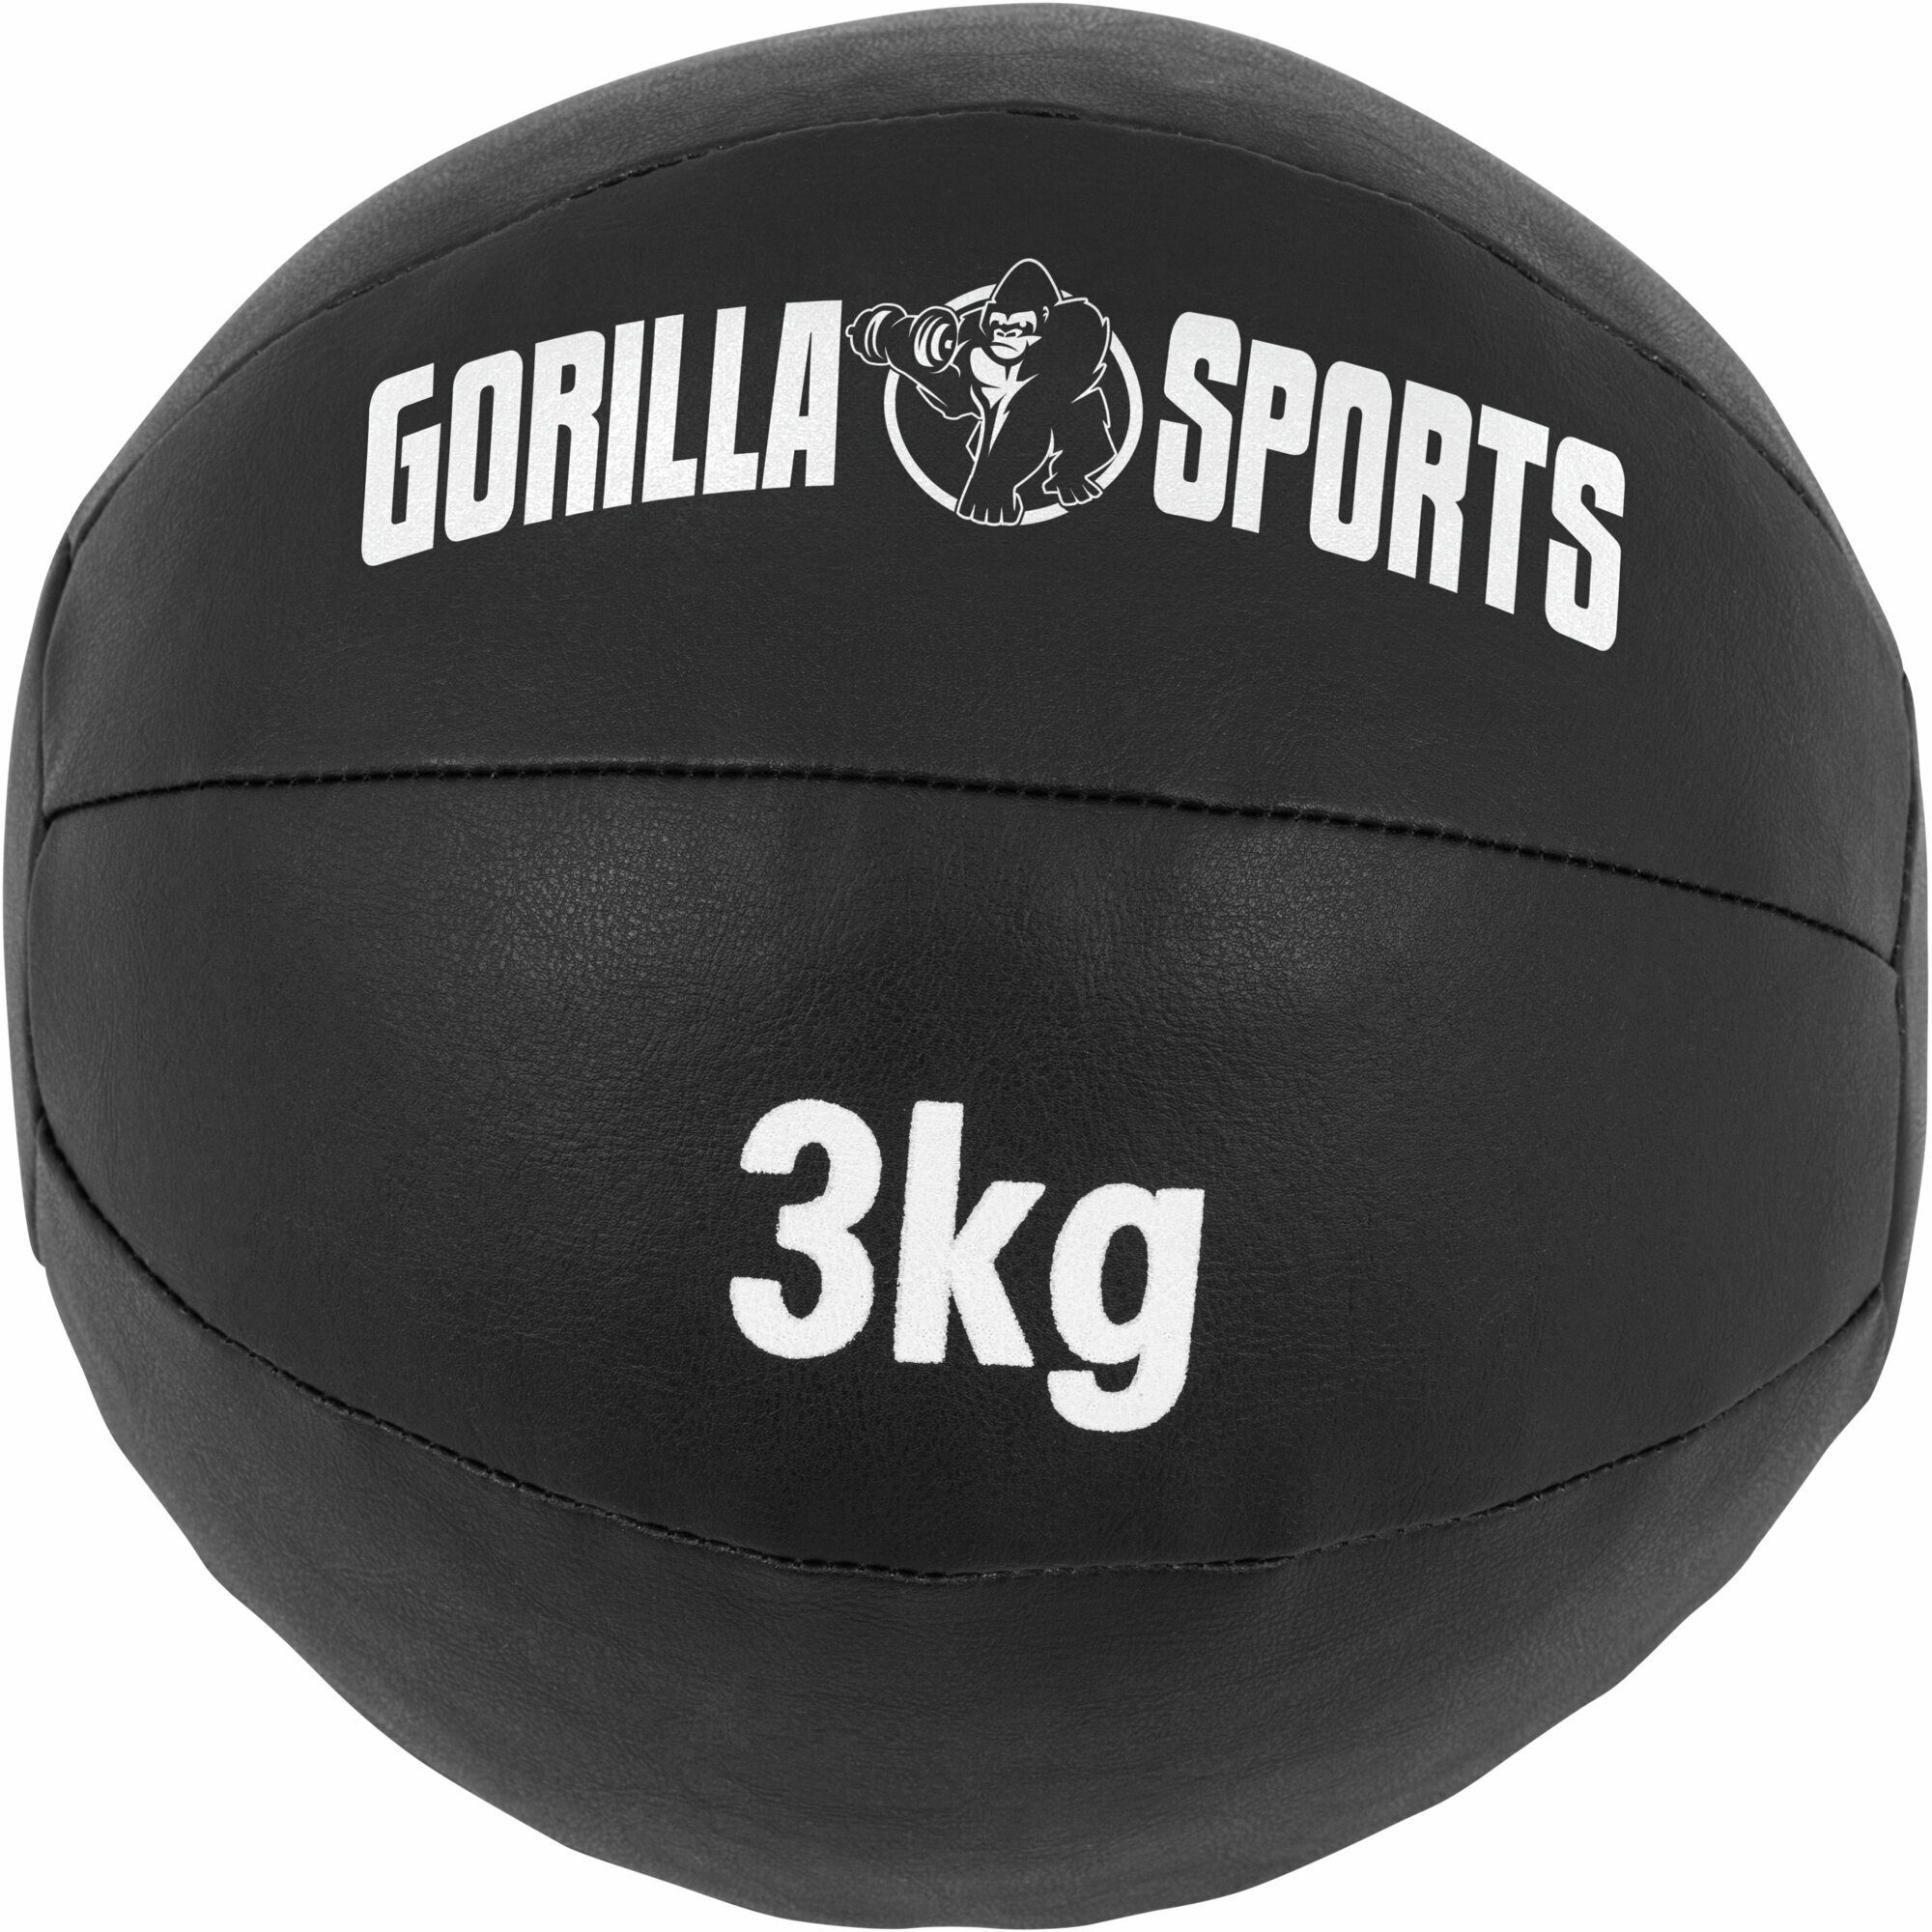 GORILLA SPORTS Medizinball Einzeln/Set, 29cm, aus Leder, Trainingsball, Fitnessball, Gewichtsball 3 kg